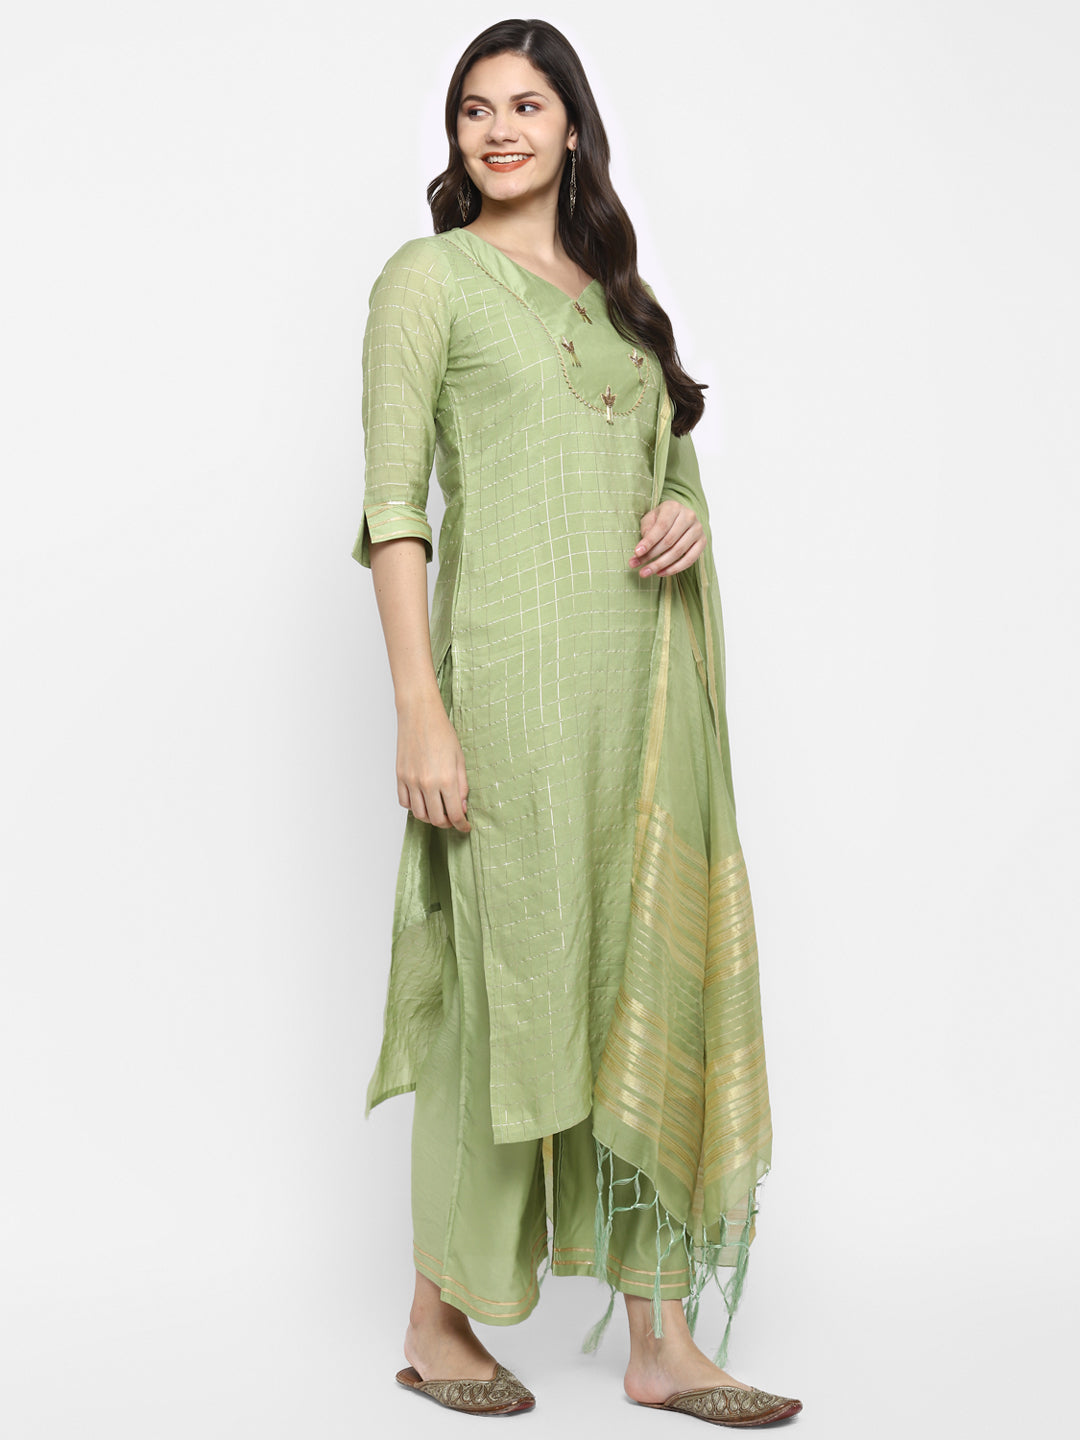 Women's Green Color Chanderi Silk Embroidered Straight Kurta Palazzo With Dupatta - VAABA